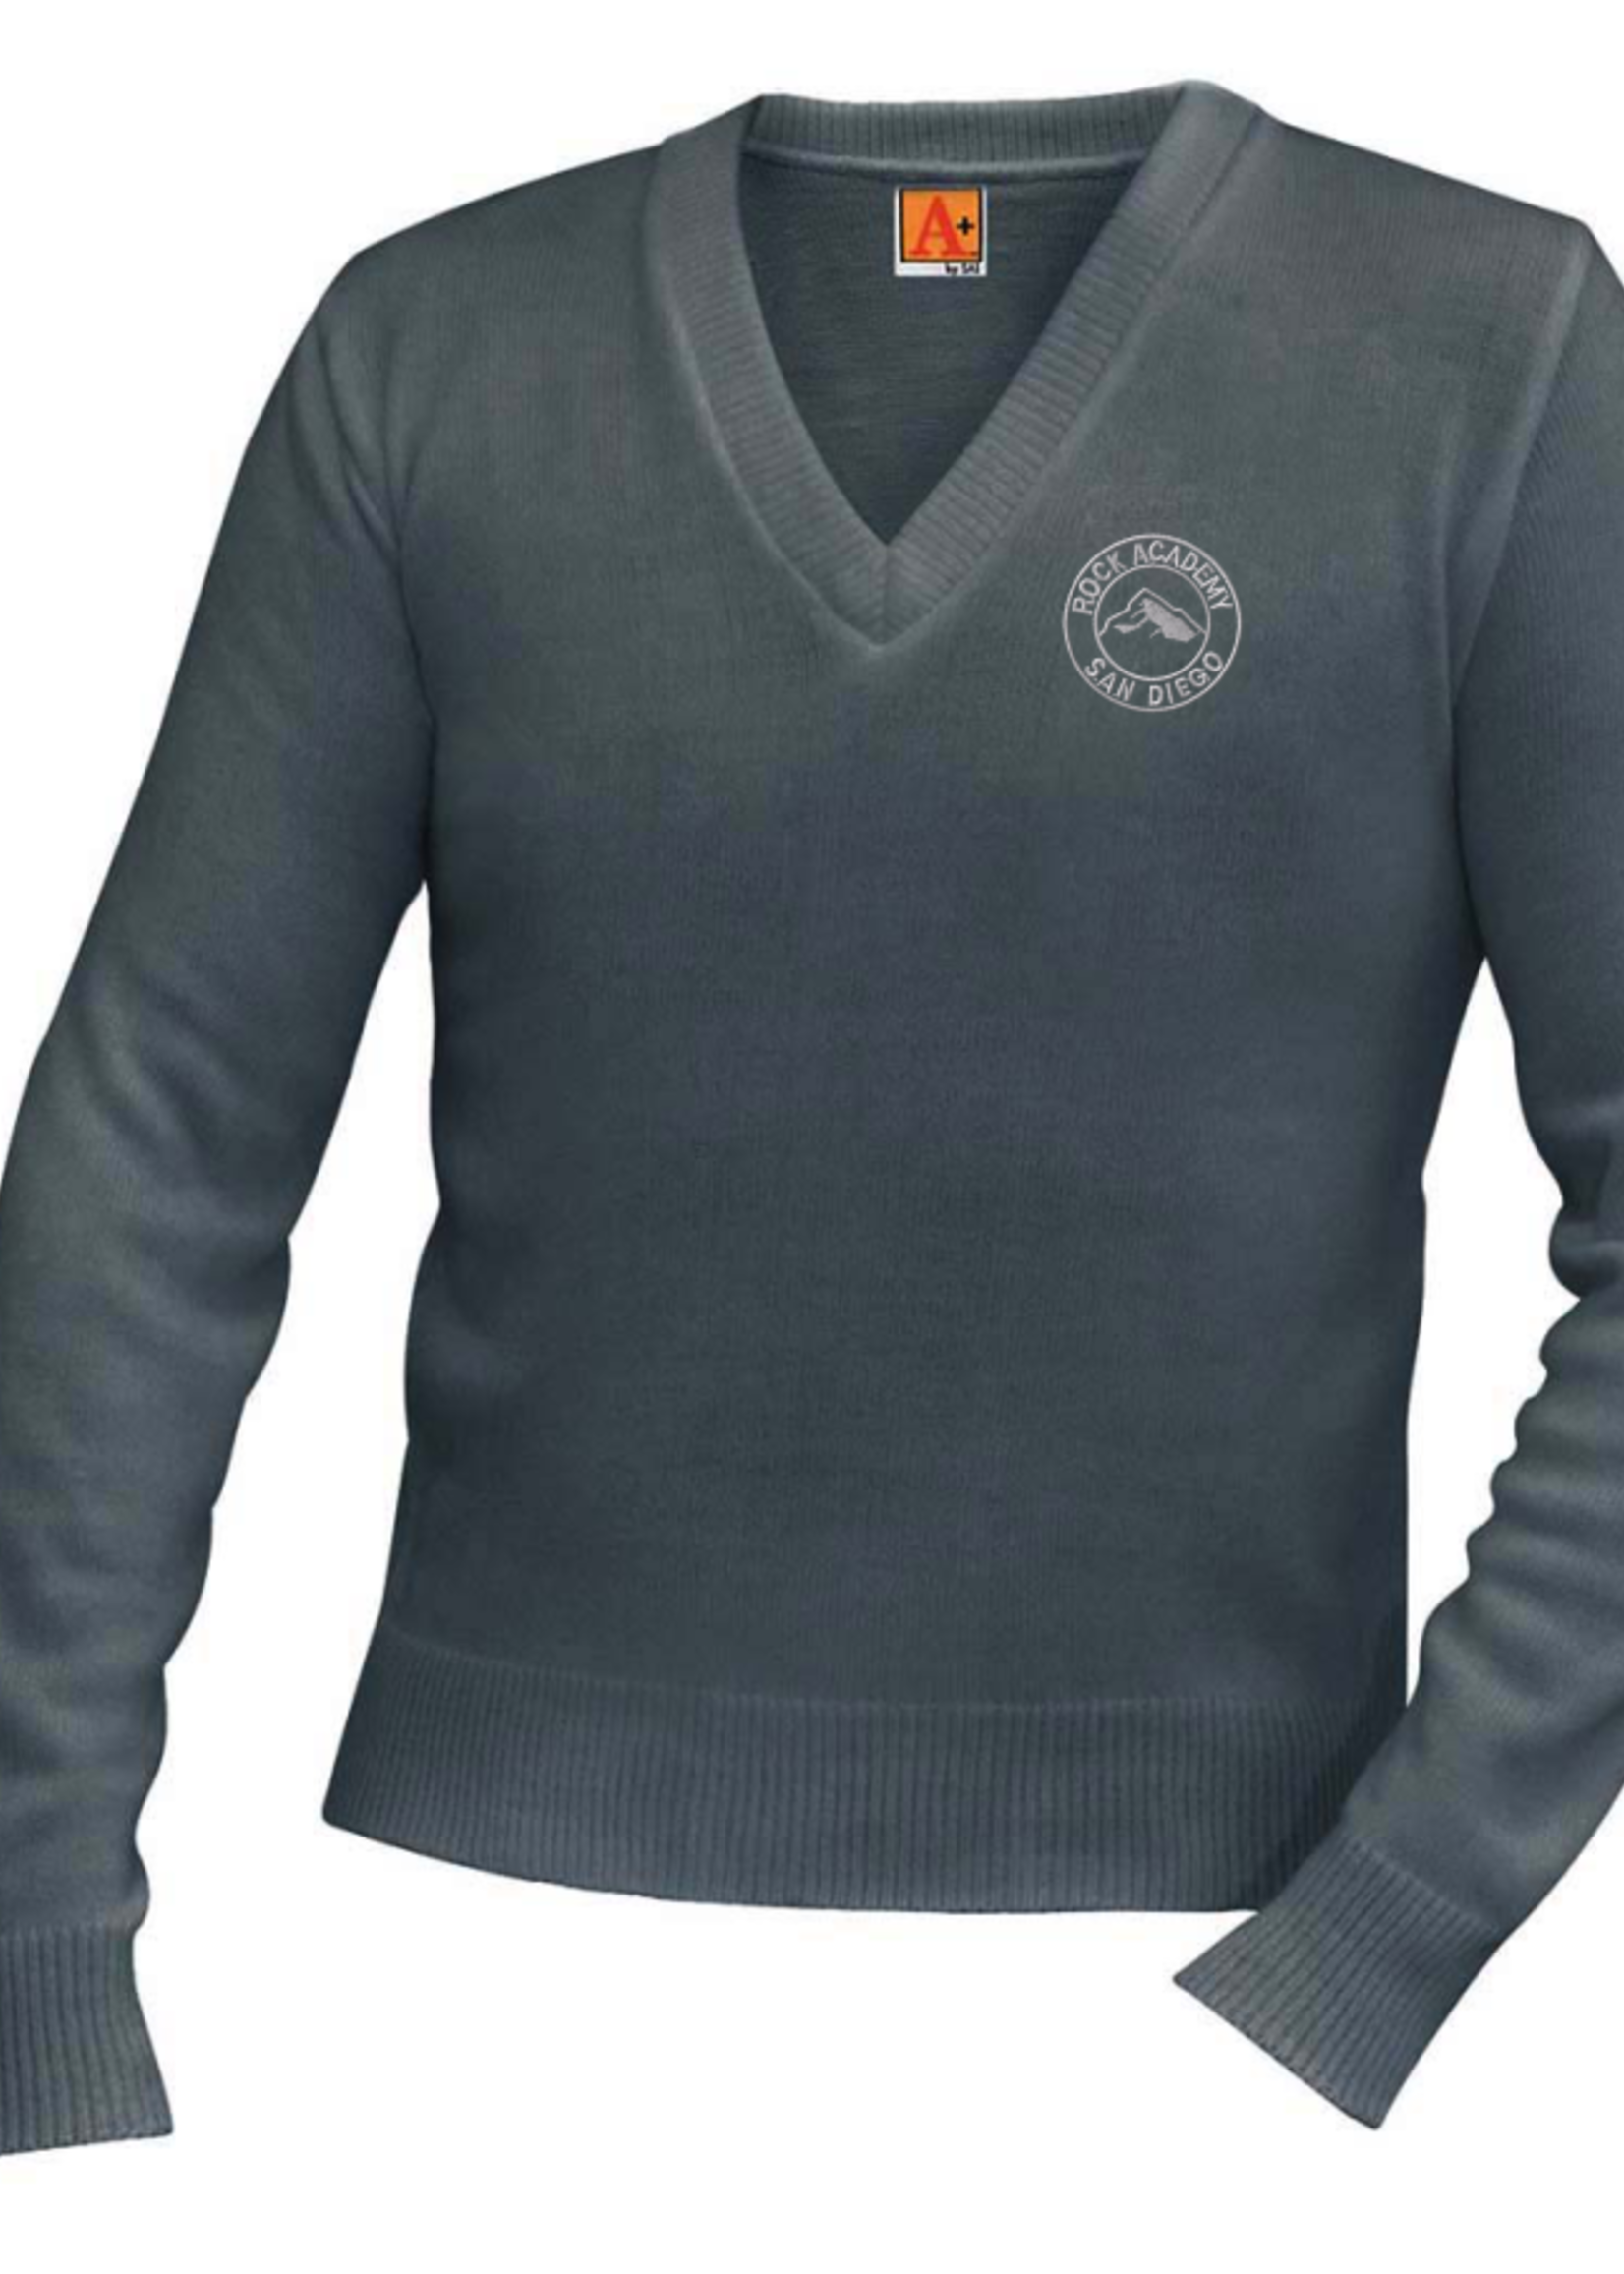 TUS ROCK V-neck Pullover sweater